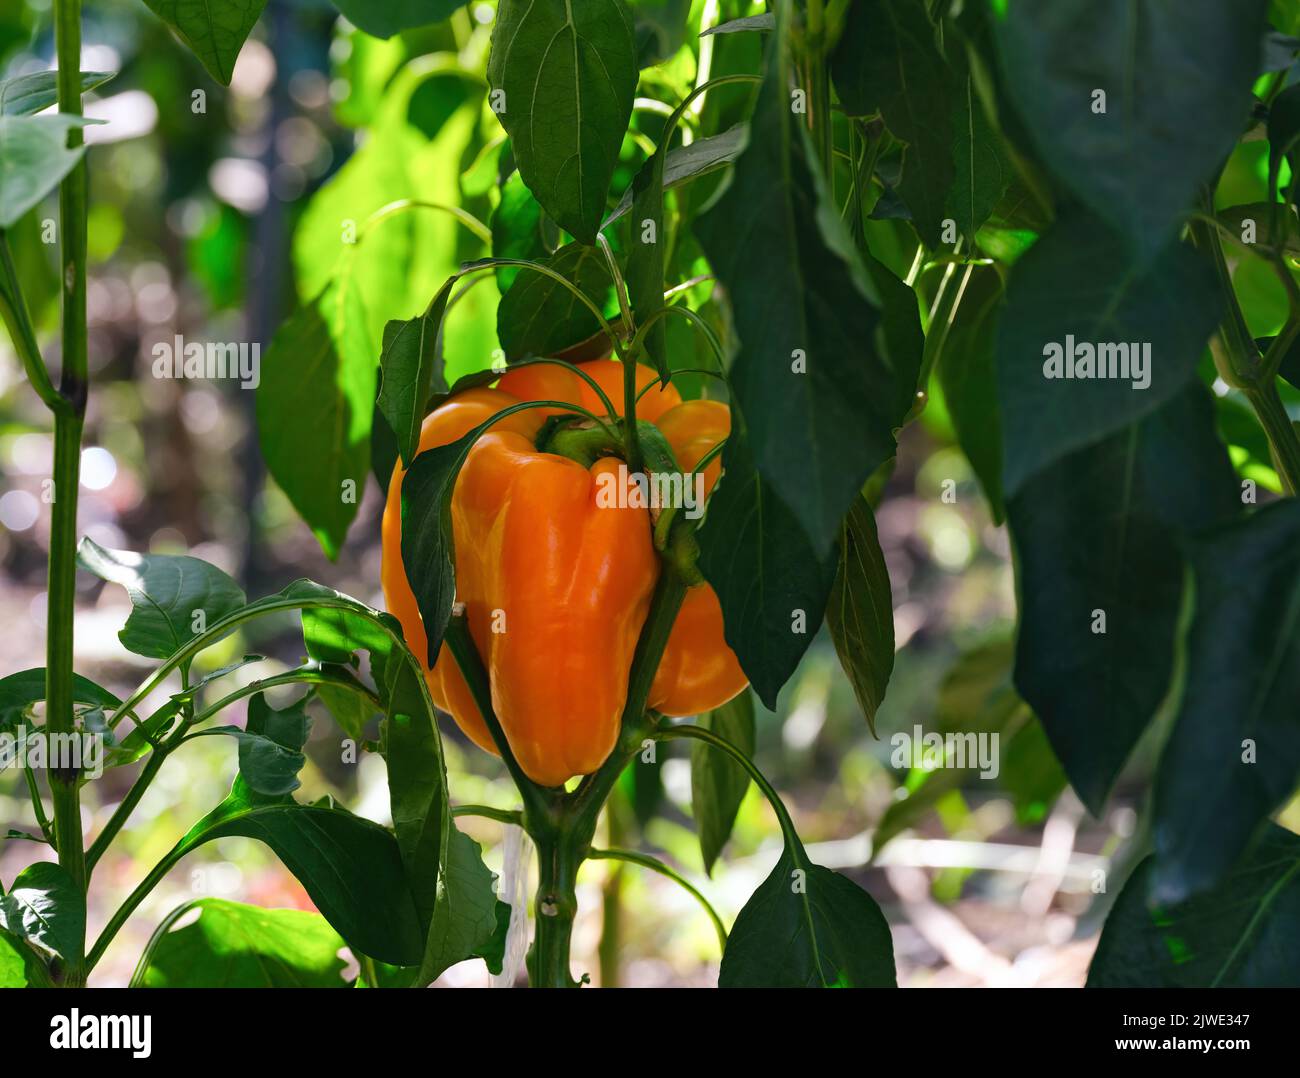 An organic orange bell pepper on a bush in the garden Stock Photo